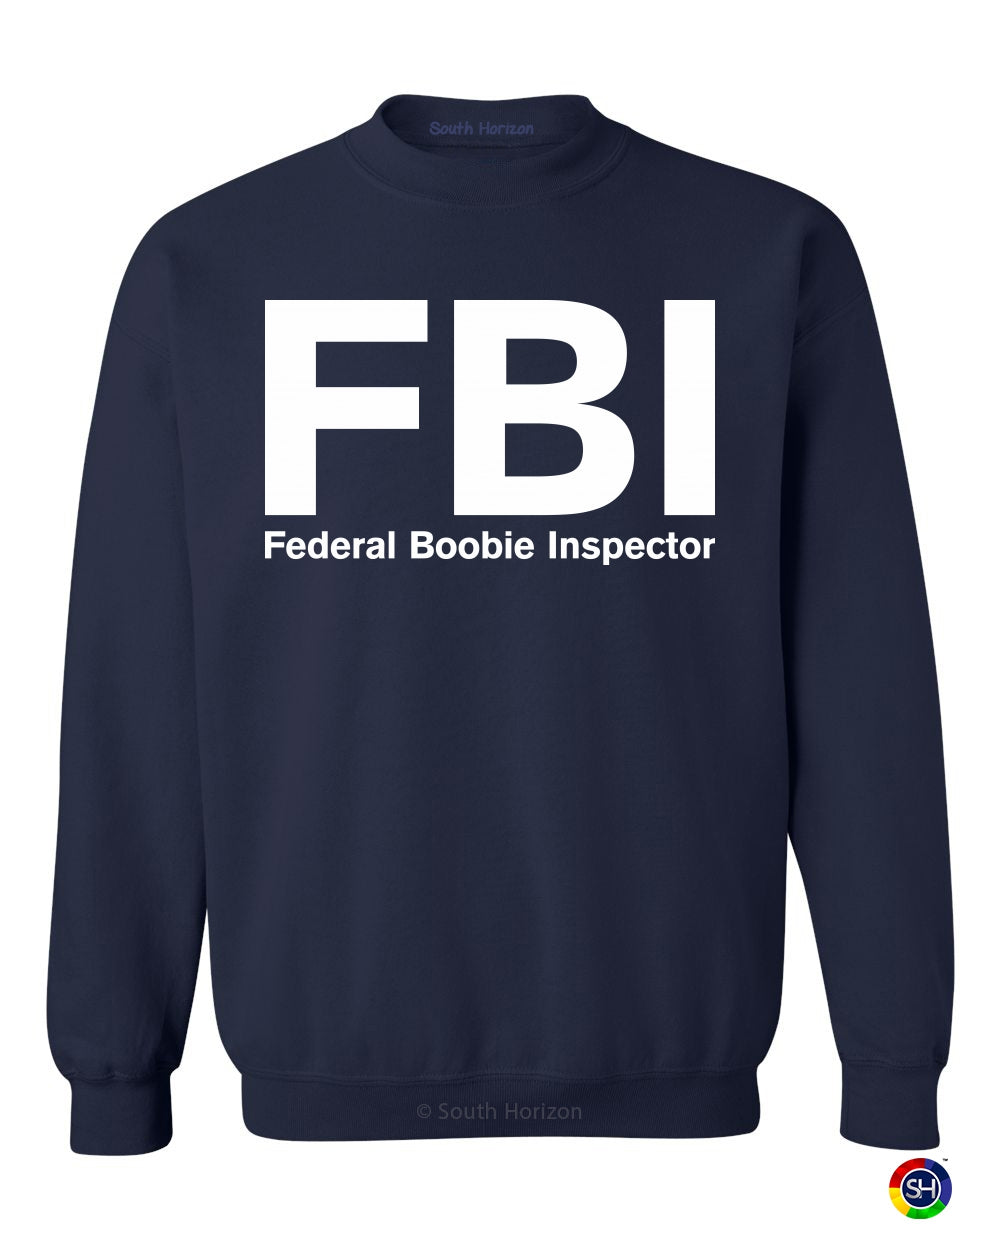 Federal Boobie Inspector on SweatShirt (#1040-11)